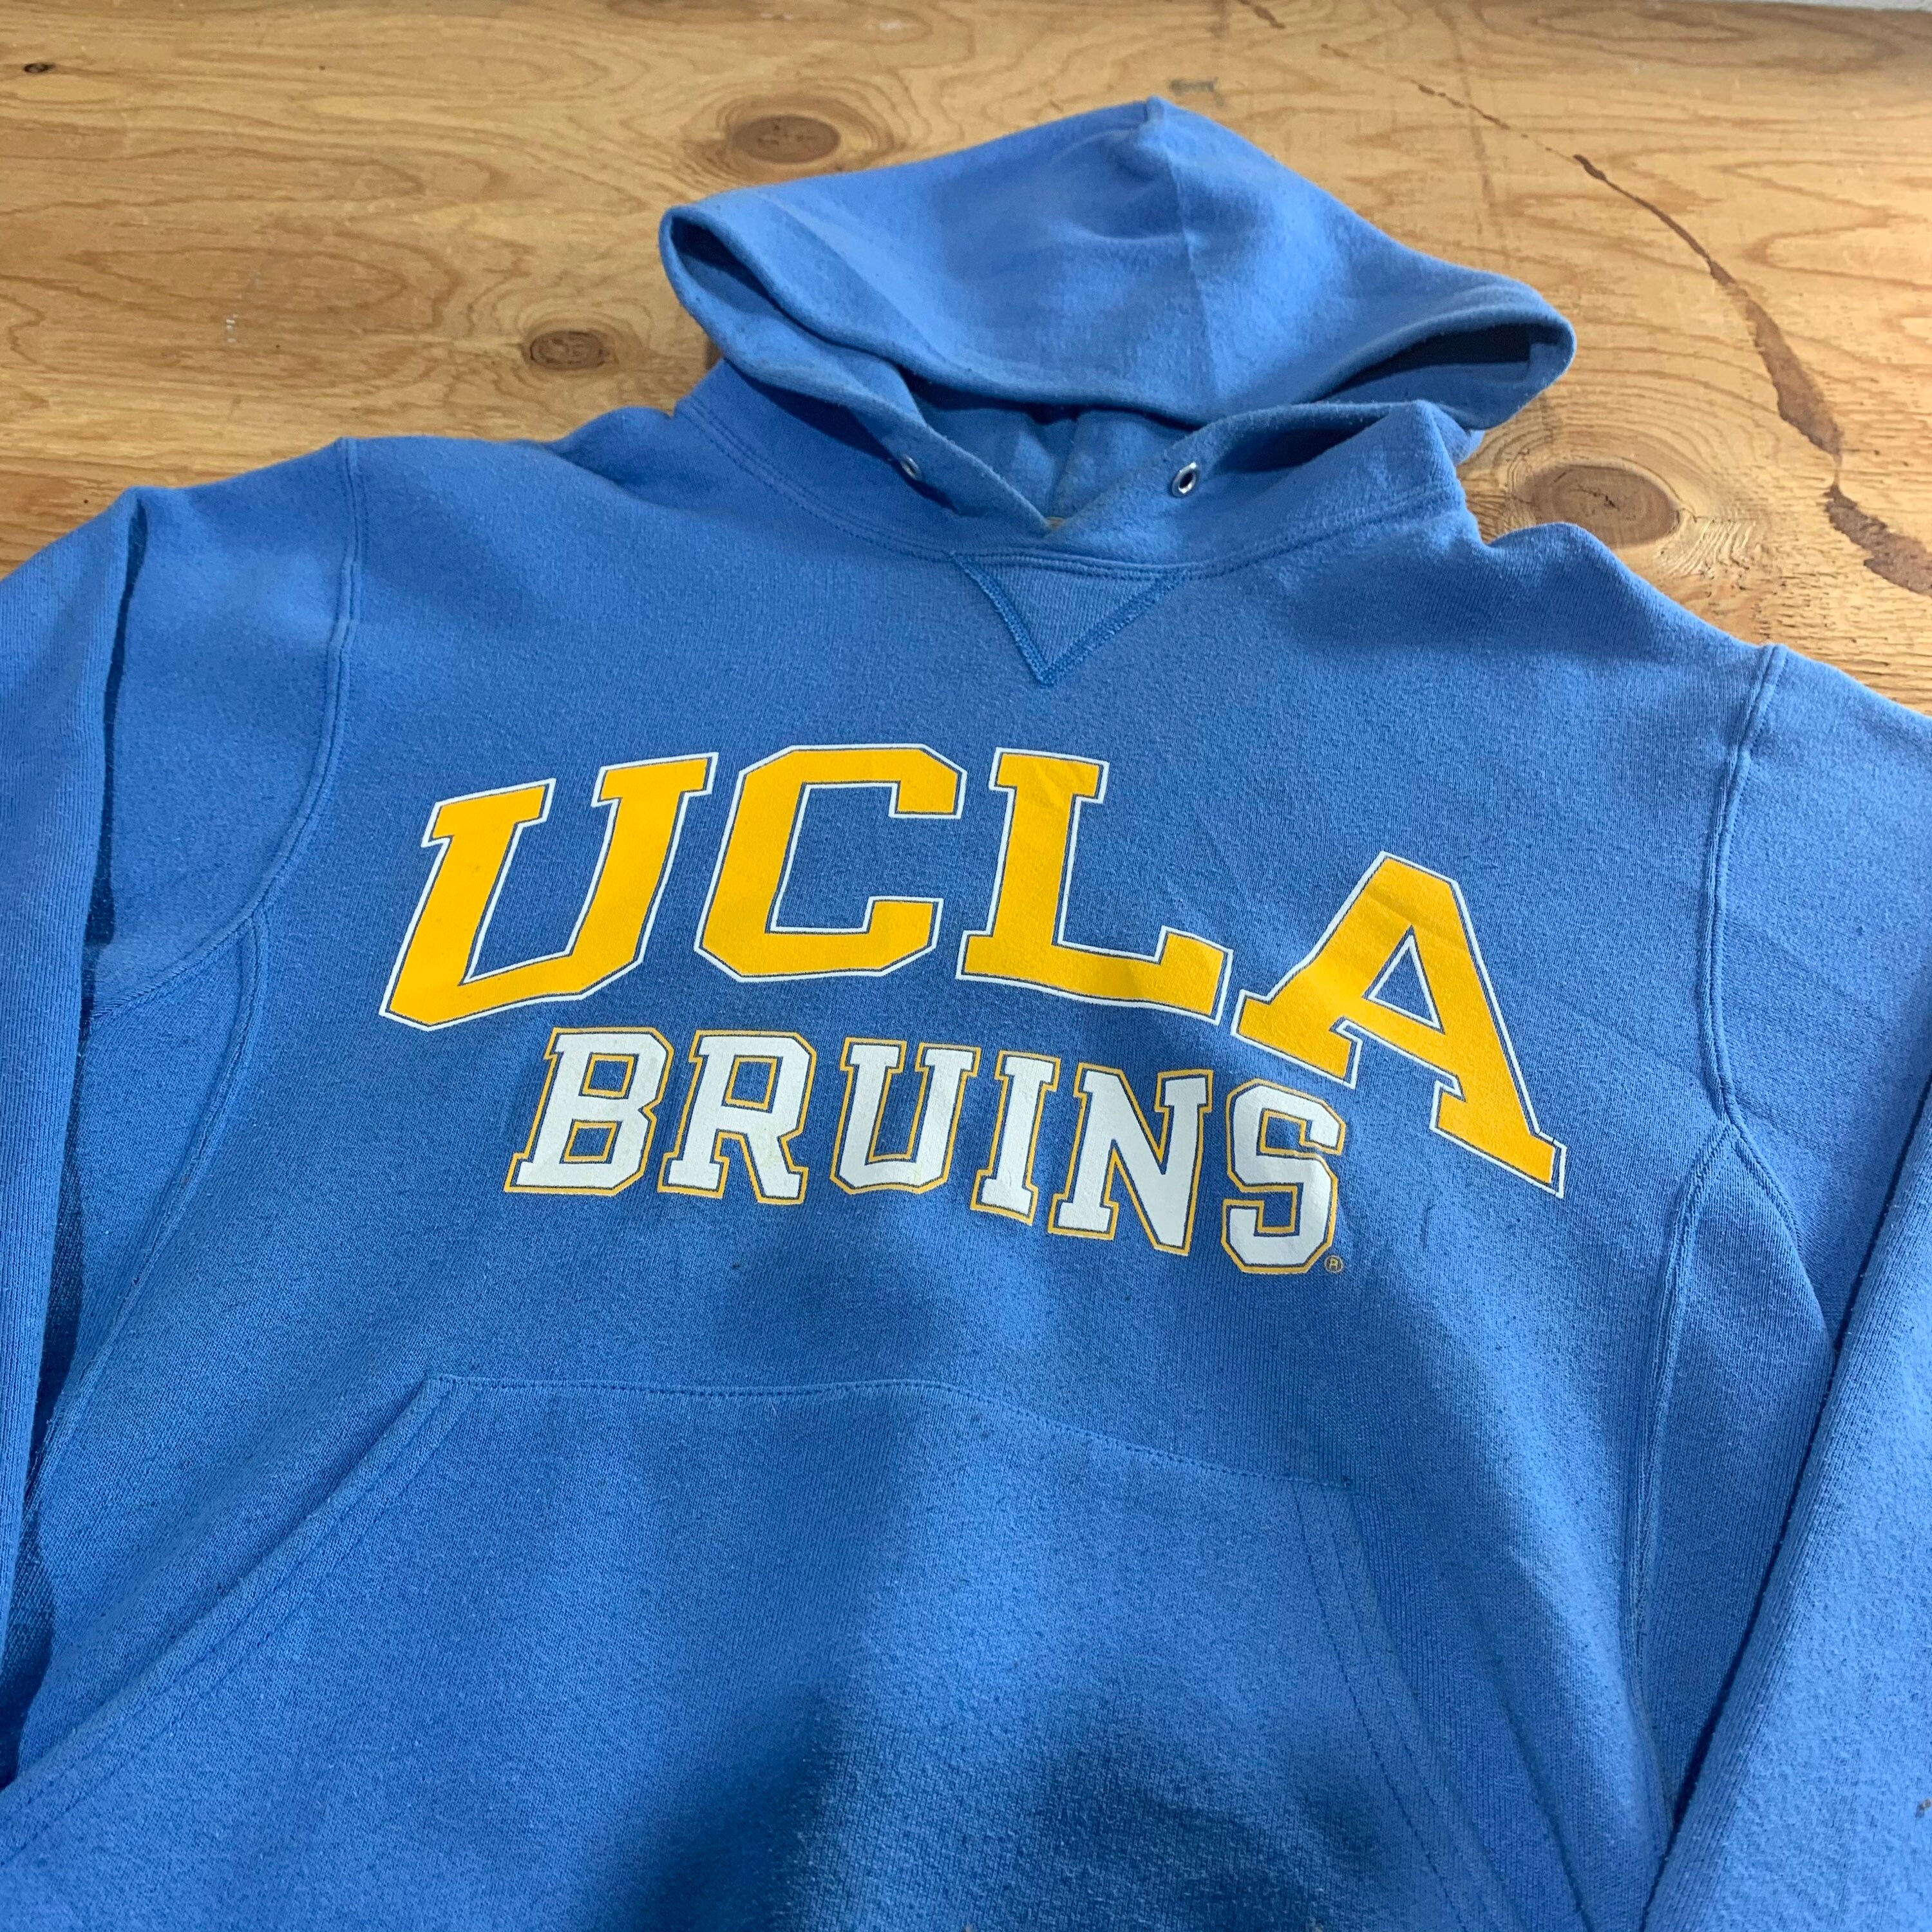 Vintage 90s UCLA Bruins Graphic Sportswear Sweatshirt / | Etsy